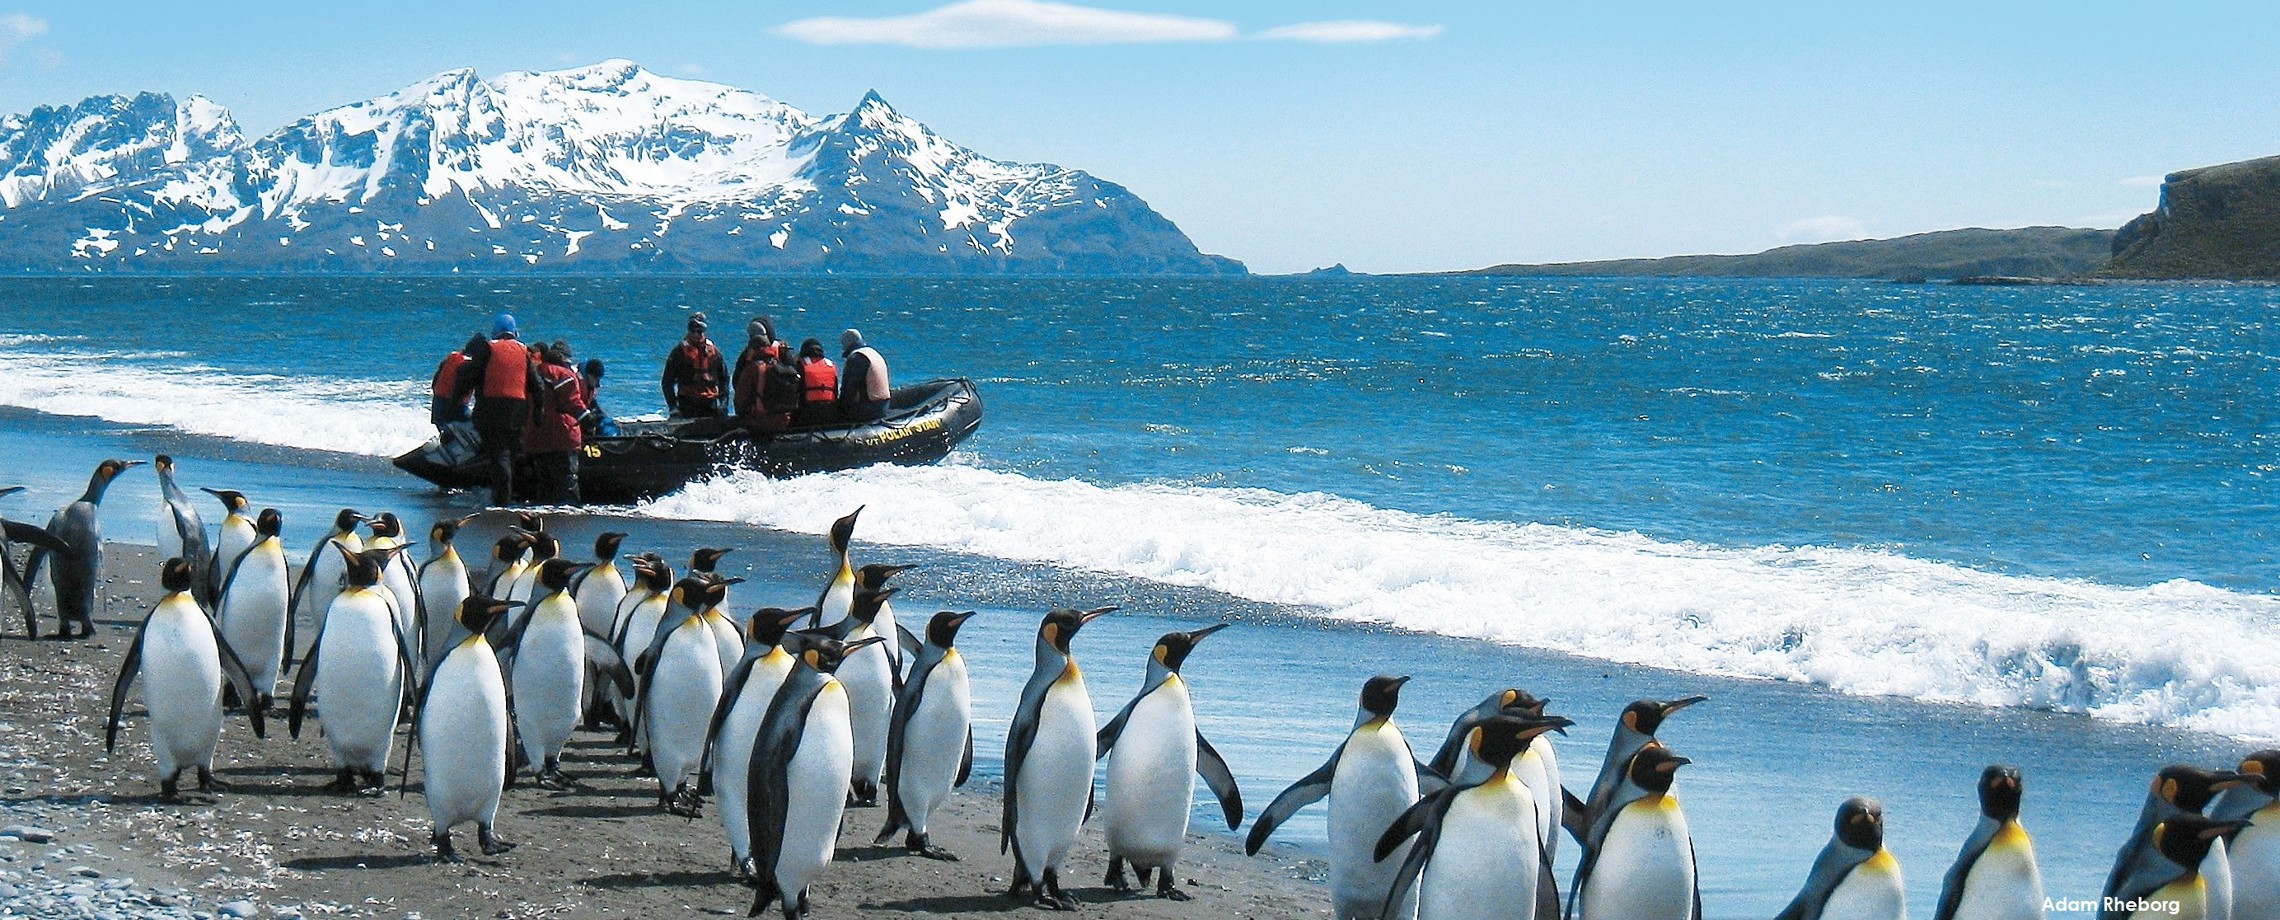 Pingvin Antarktis.jpg (4)